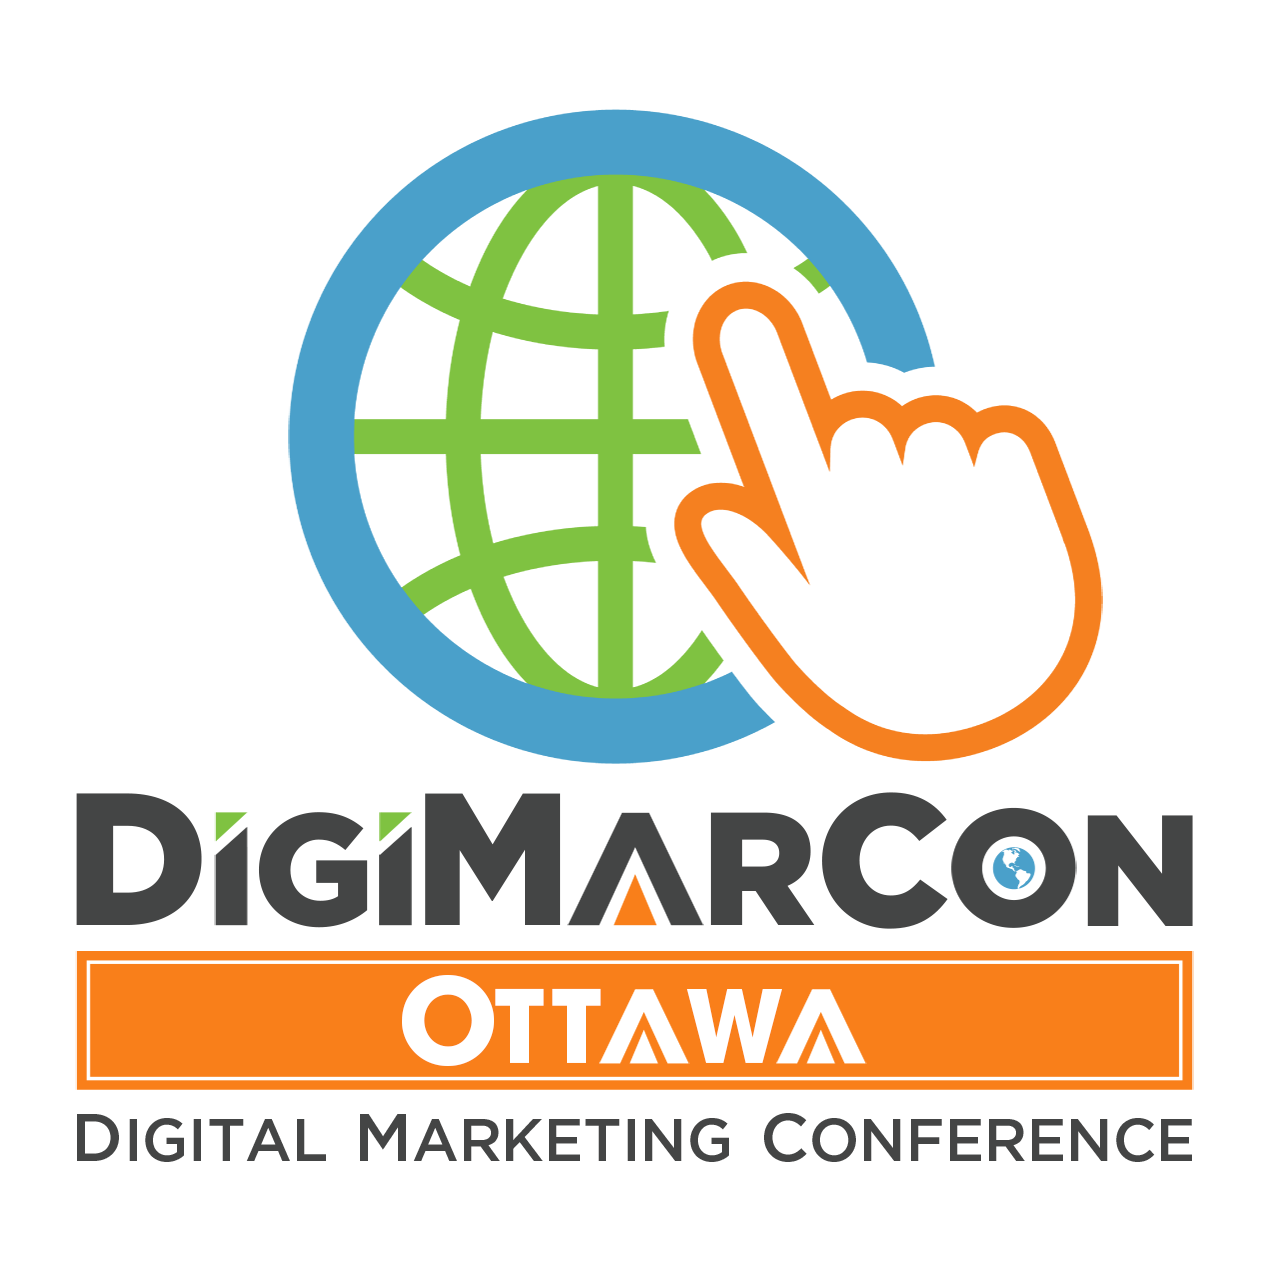 Ottawa Digital Marketing, Media & Advertising Conference